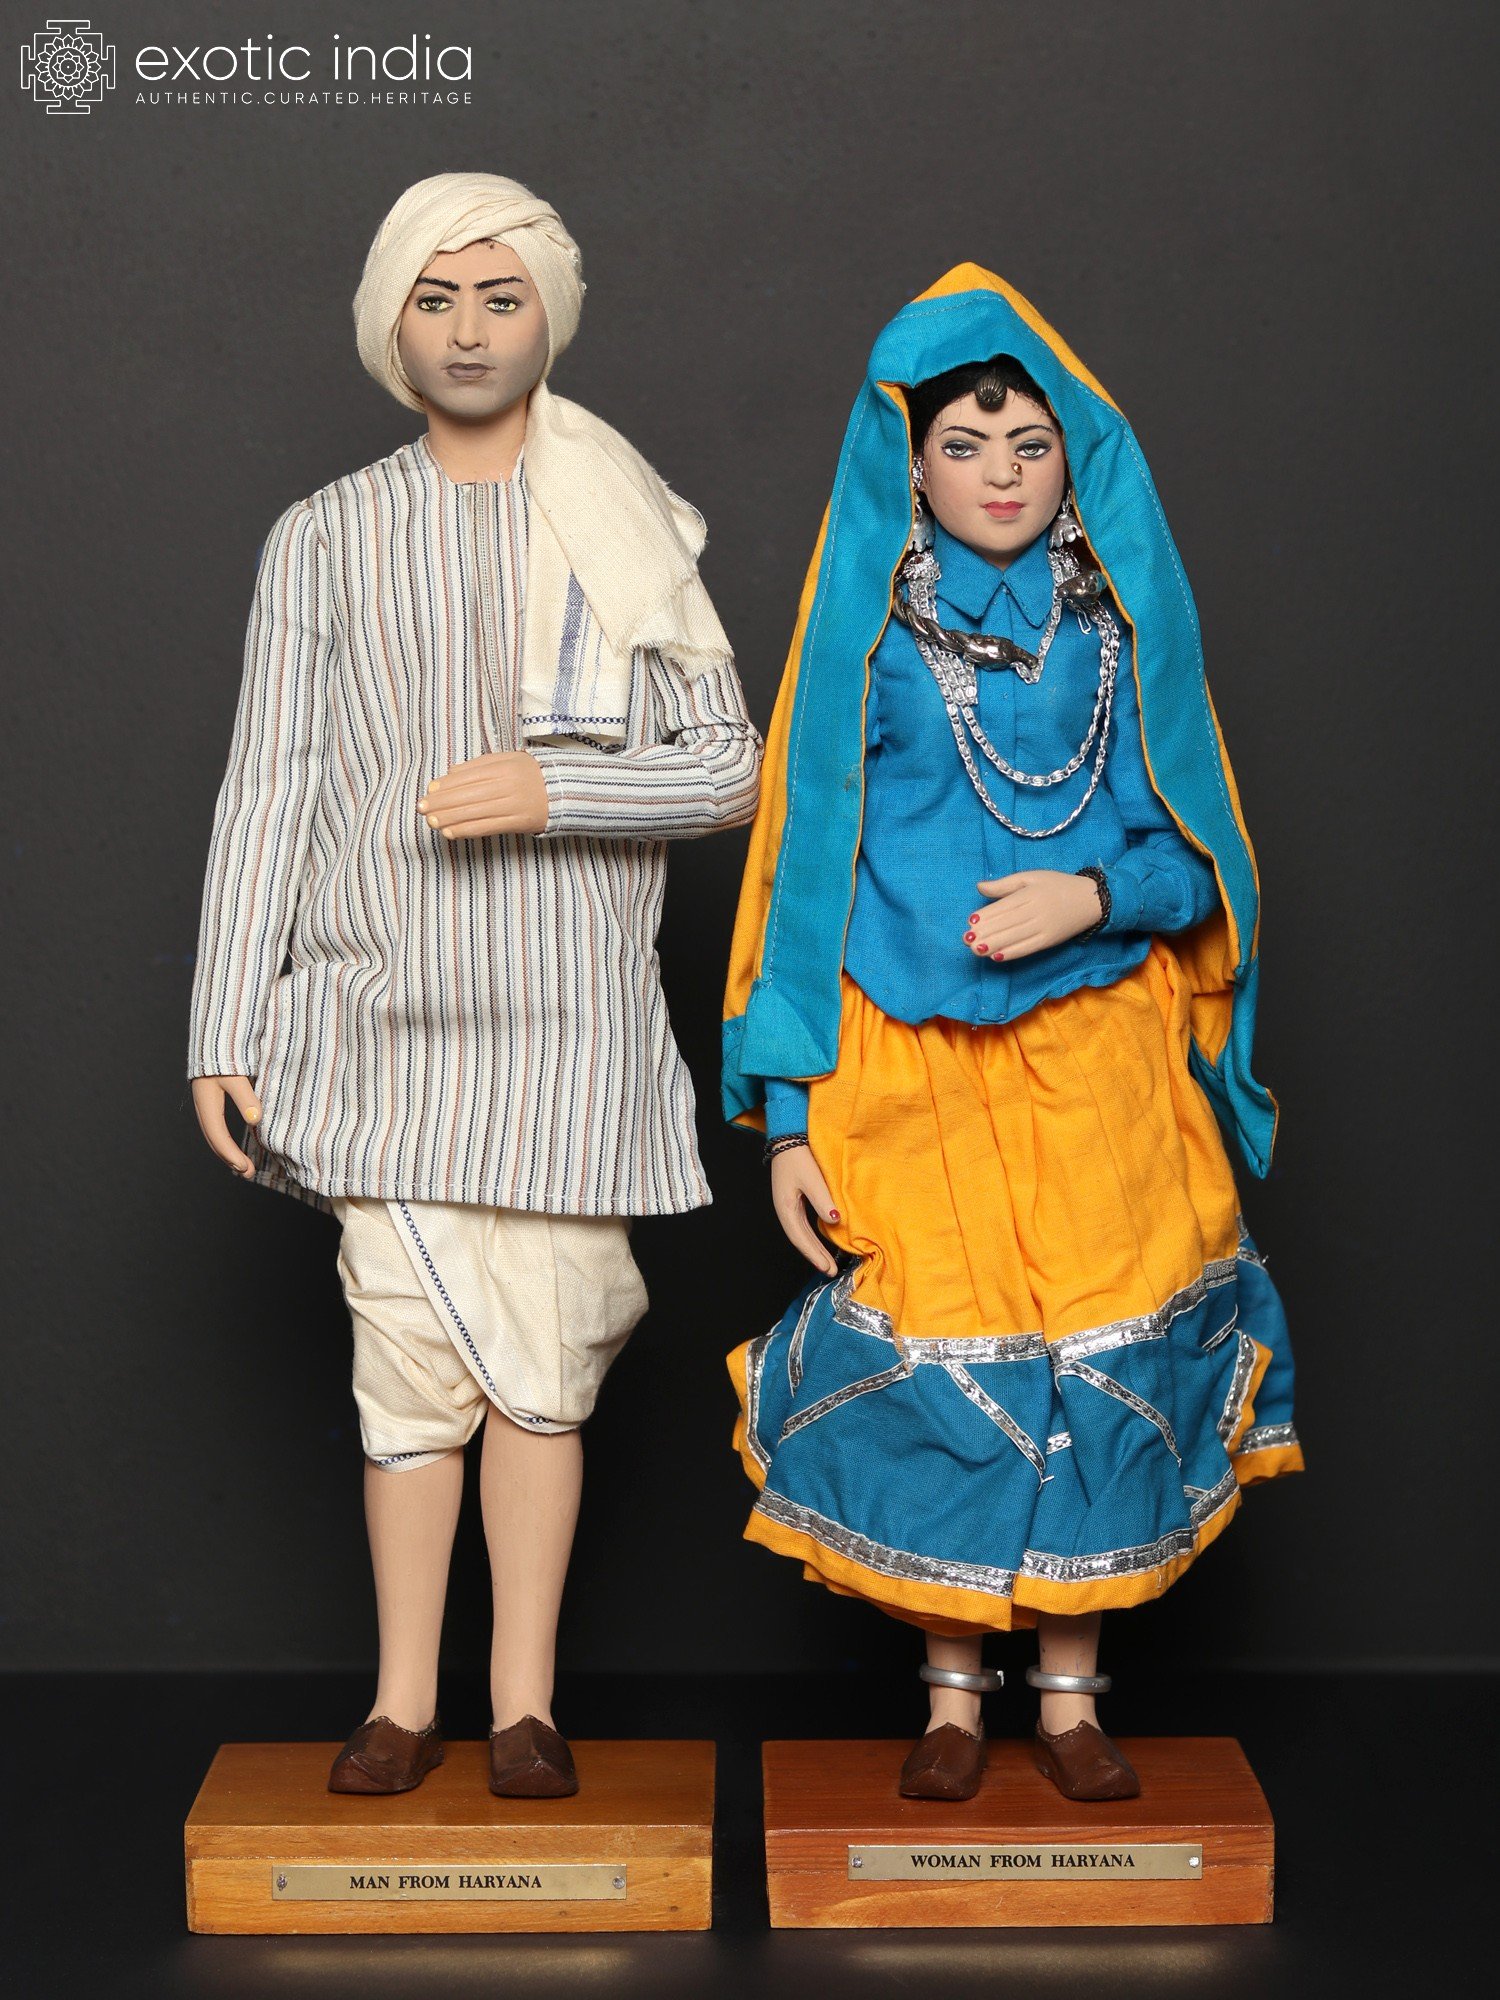 Haryanvi Treditional dresses and jewelry ||52 gaz ka Daman || Haryanvi look  || Culture of haryana - YouTube